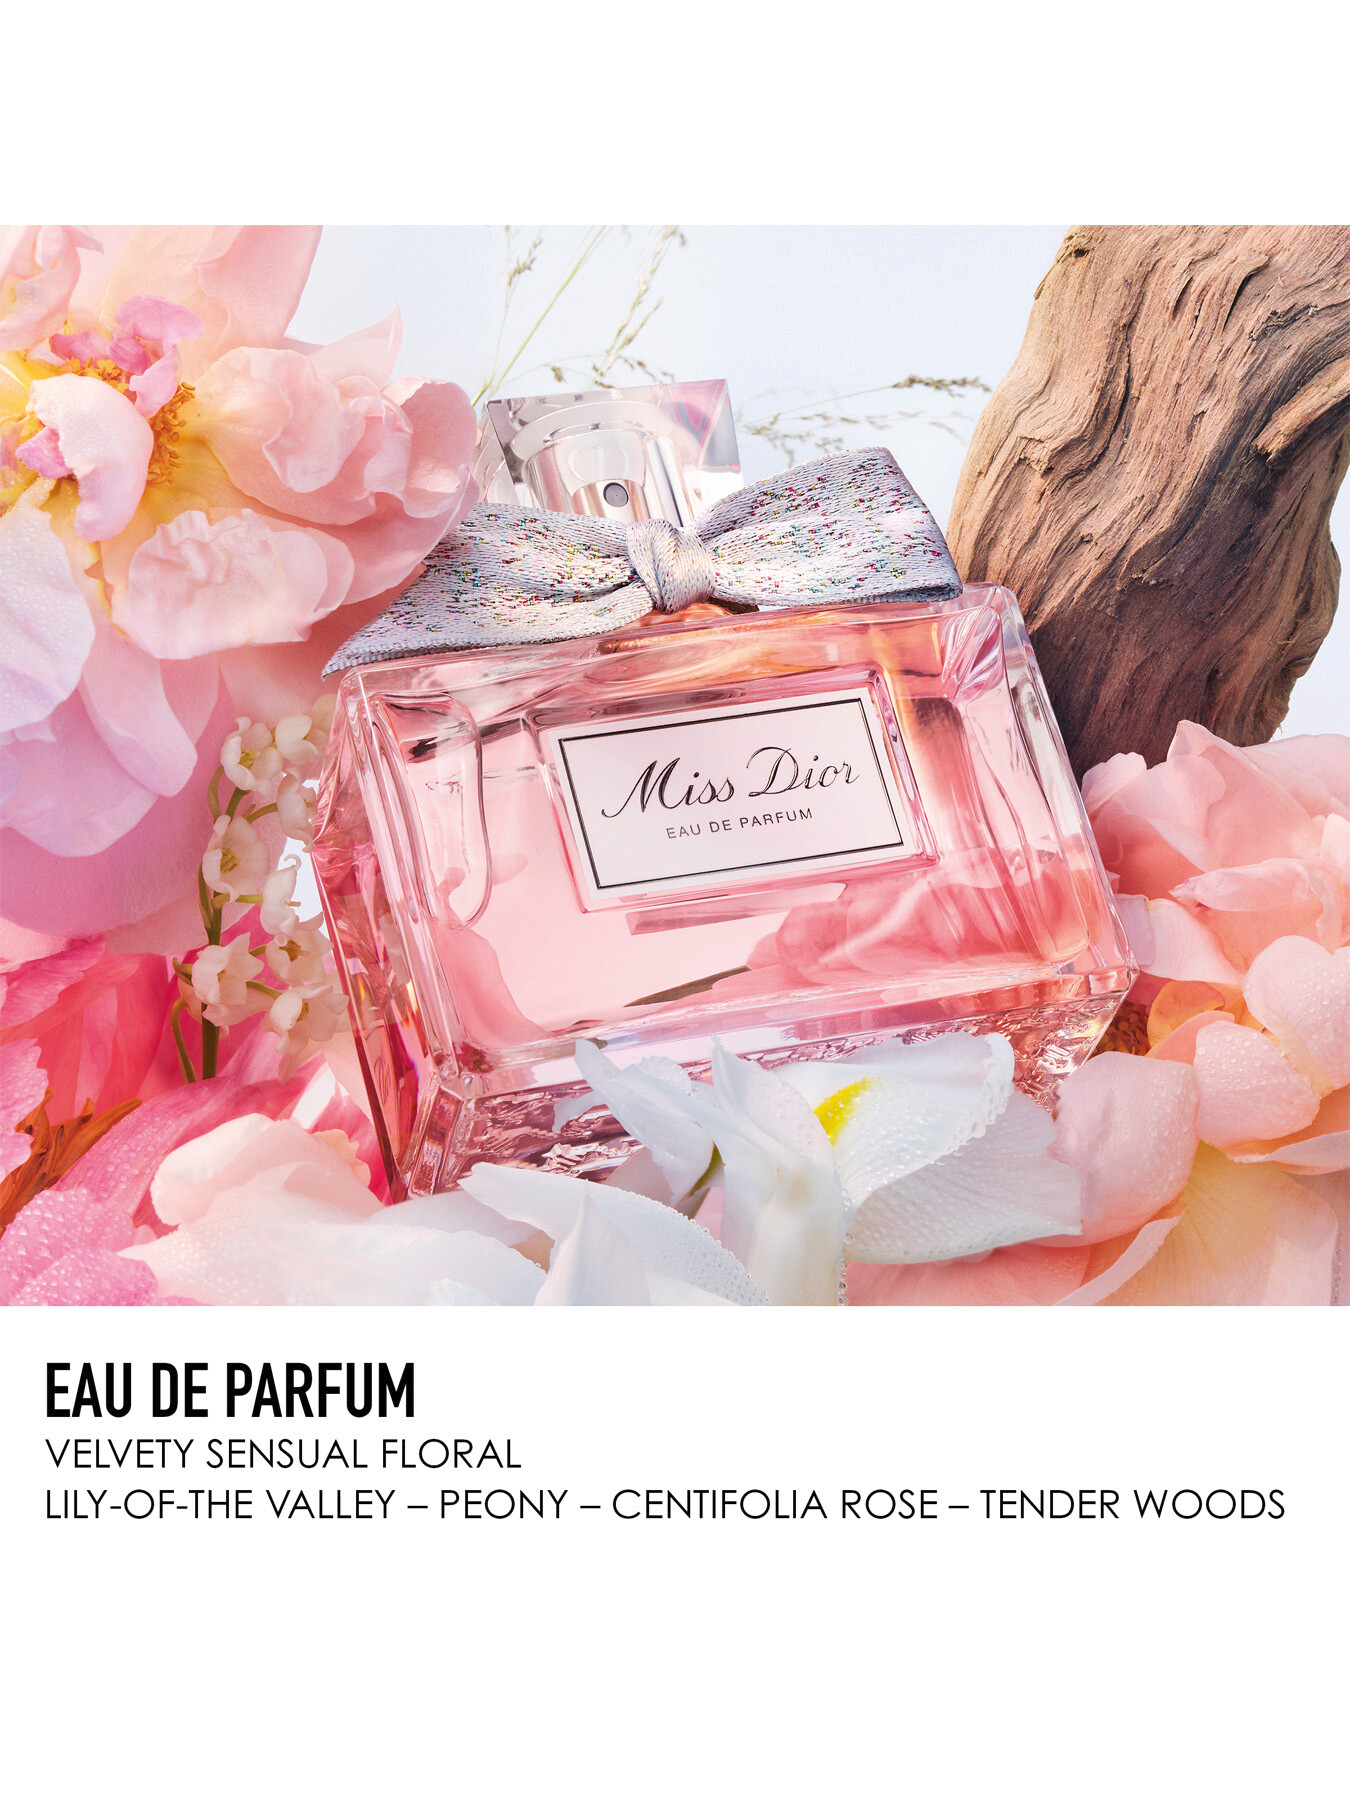 DIOR Miss Dior Eau de Parfum 100ml - Limited Edition Case